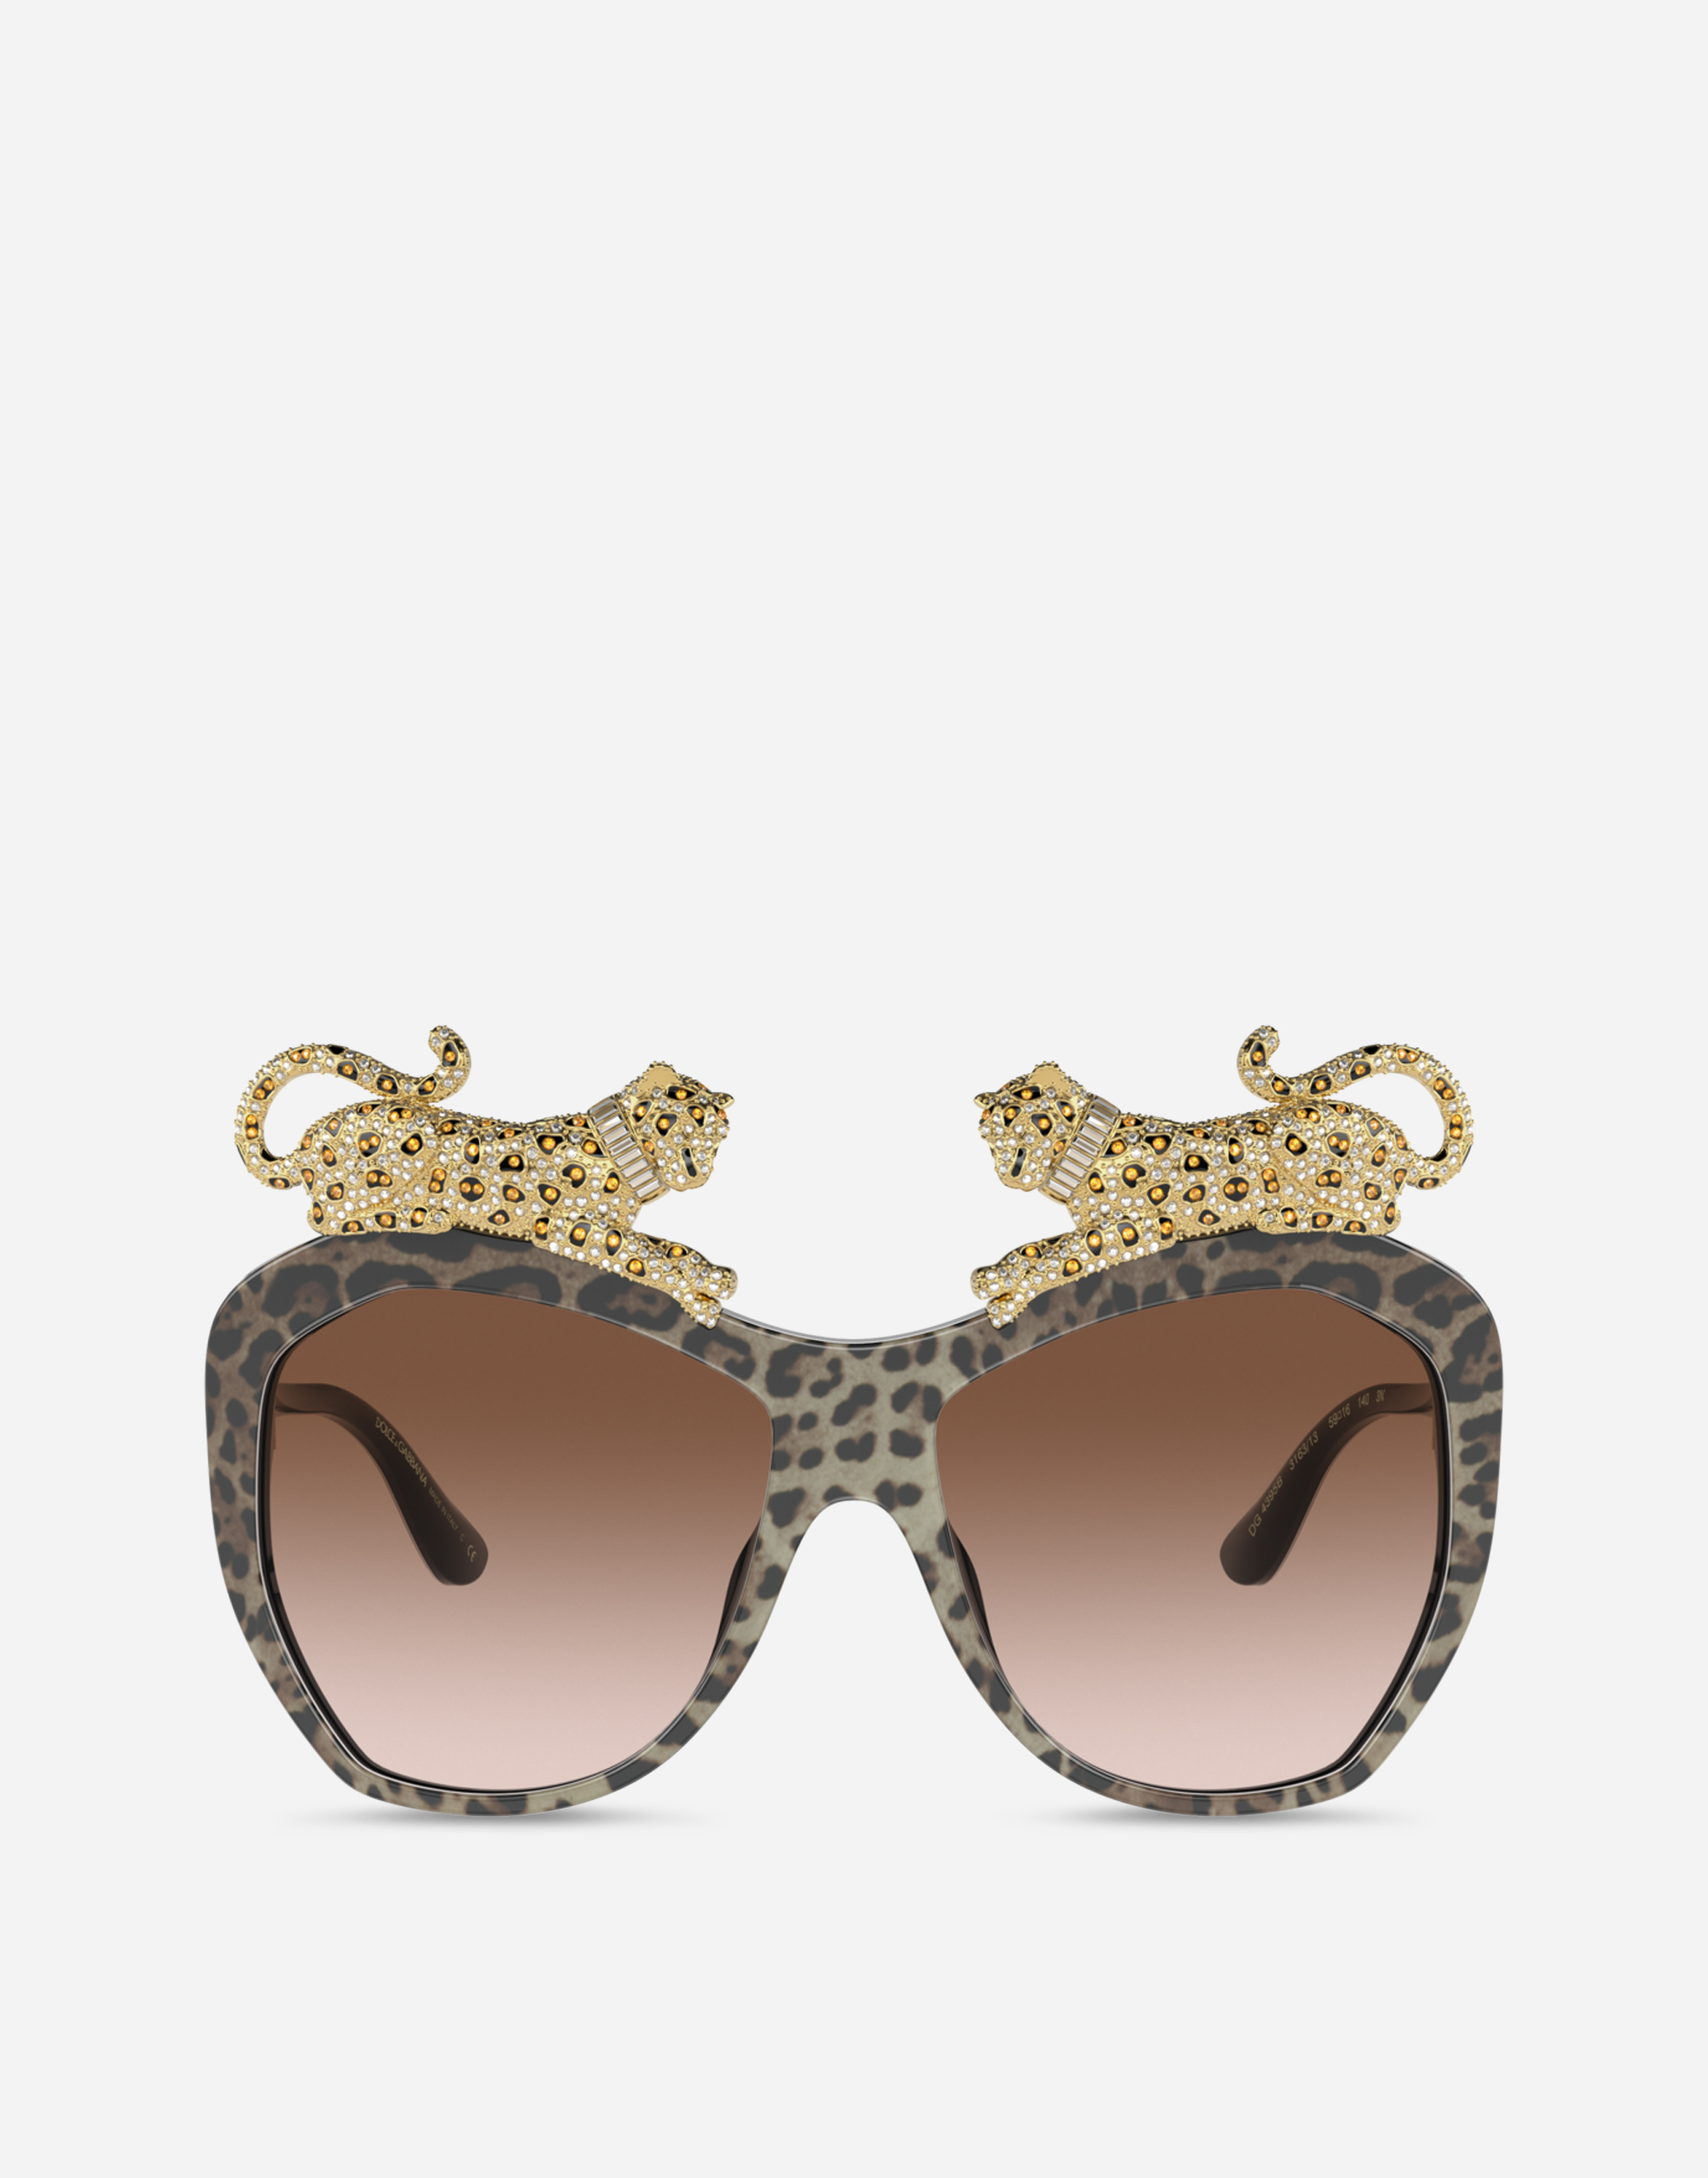 Diva sunglasses in Animal Print